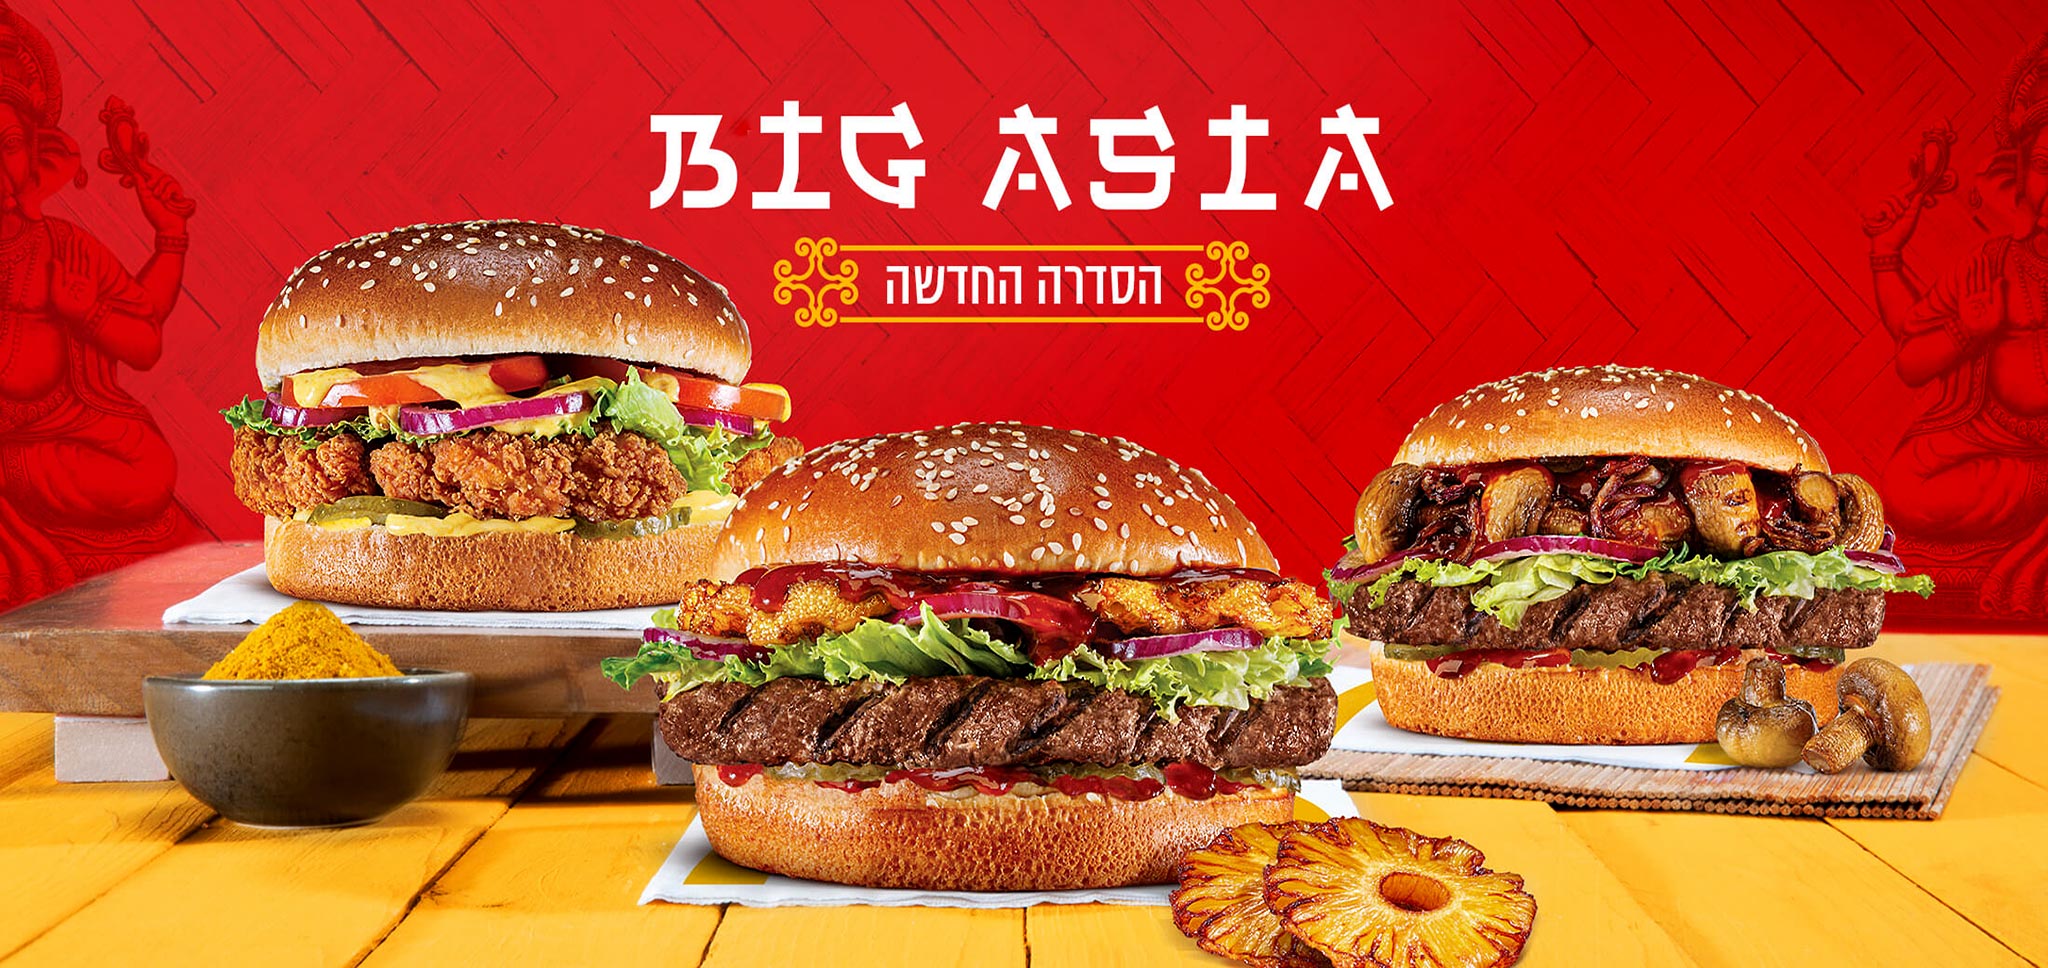 McDonalds Big Asia